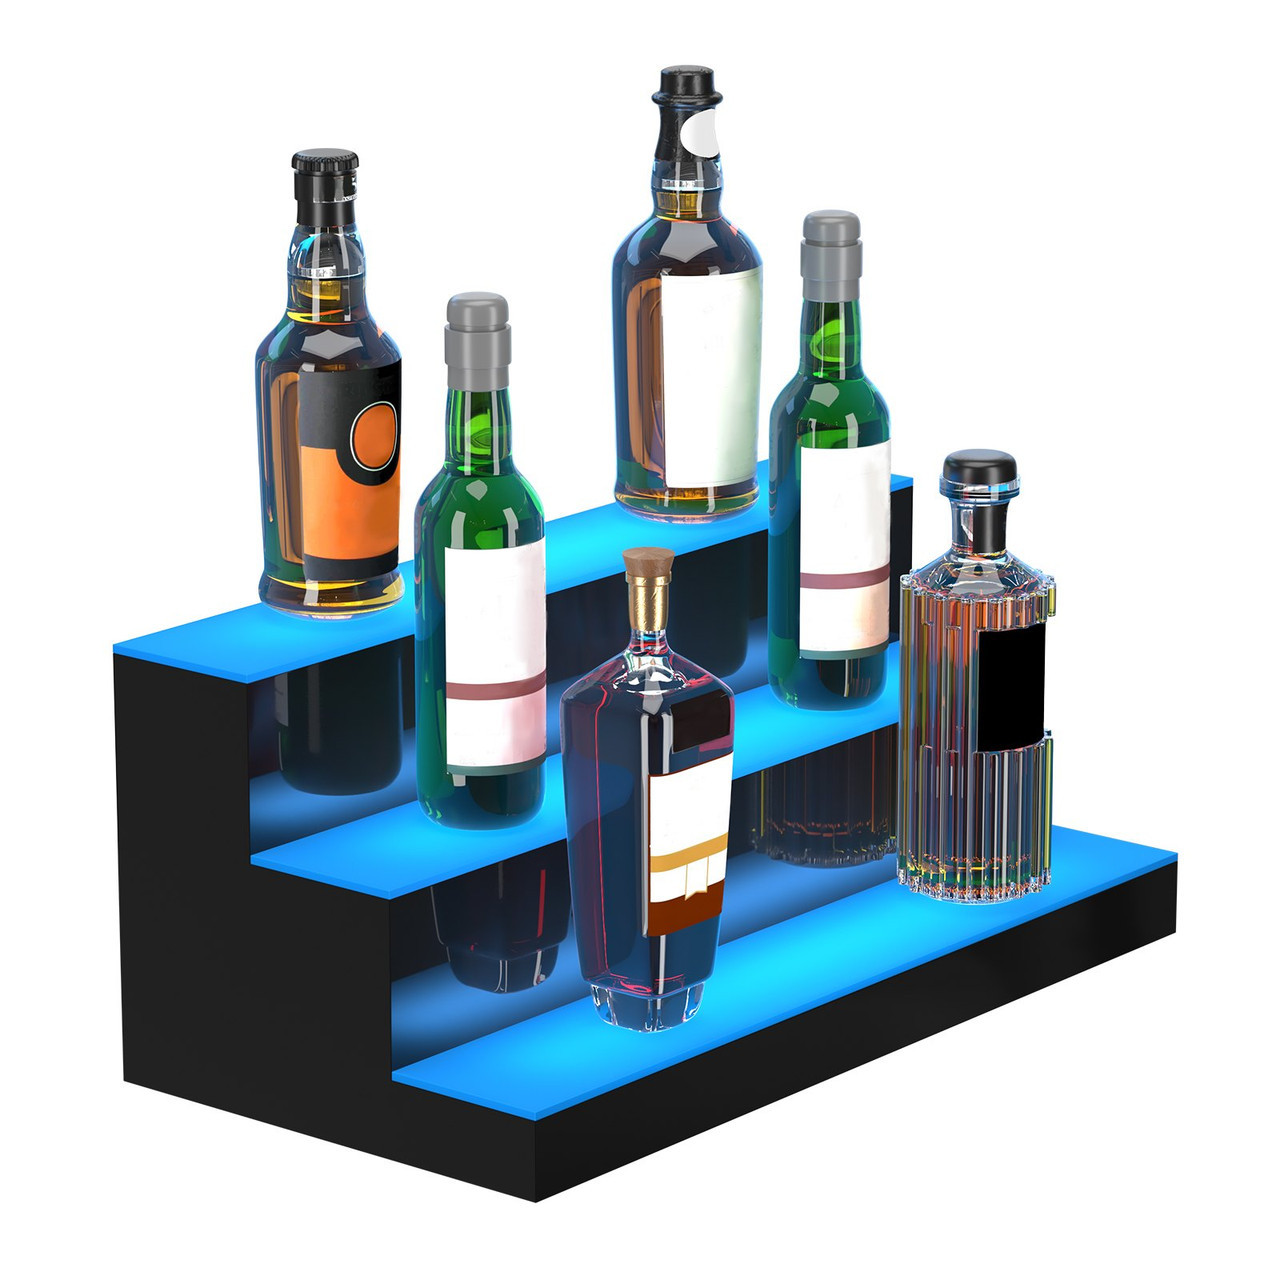 VEVOR LED Lighted Liquor Bottle Display Bar Shelf RF & App Control 24" 3-Step